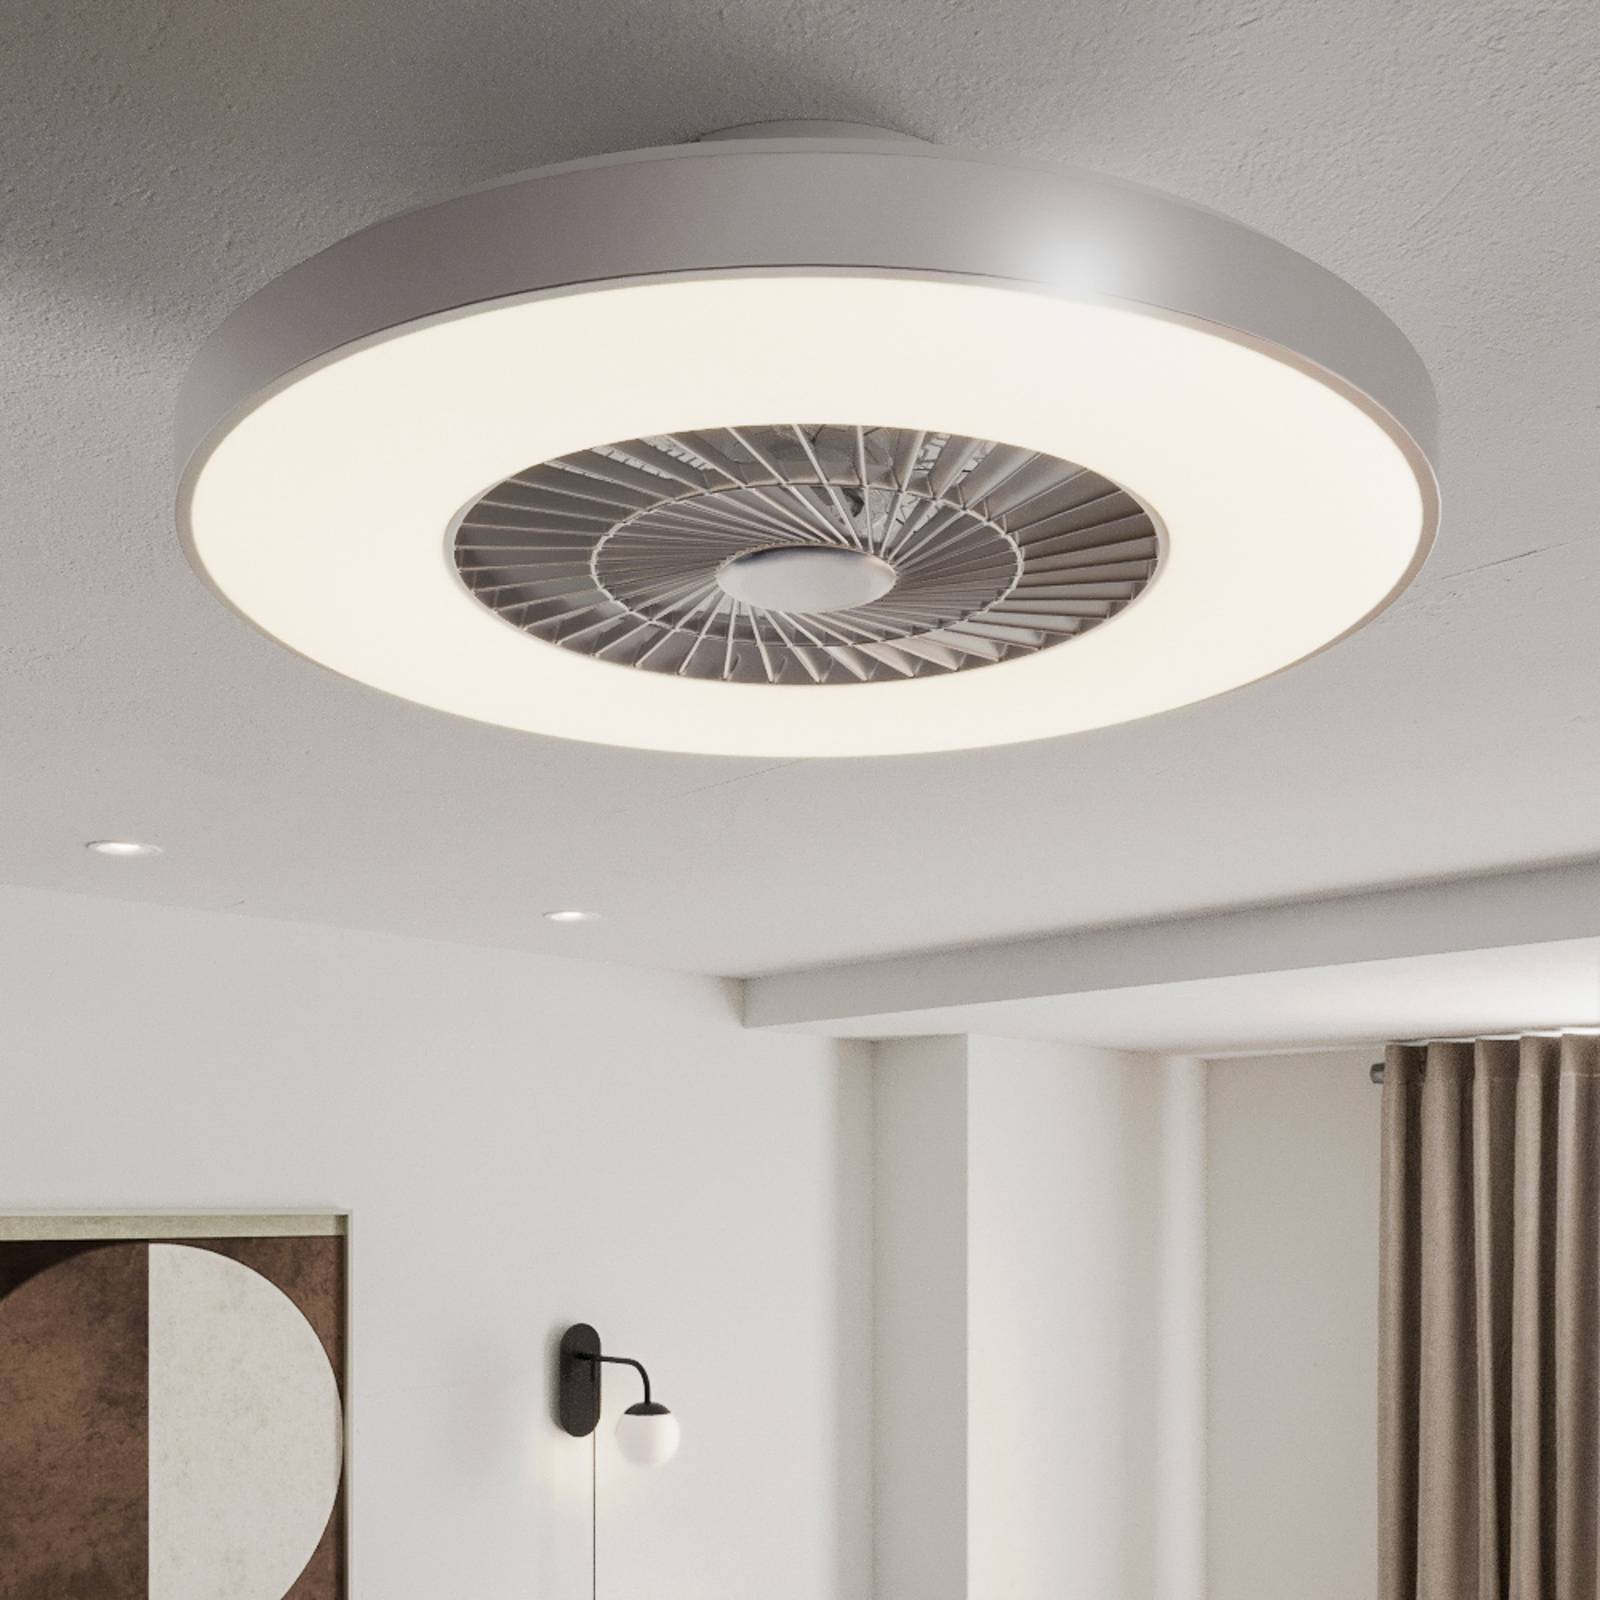 Image of Starluna Orligo ventilateur plafond LED, argenté 4251911704846